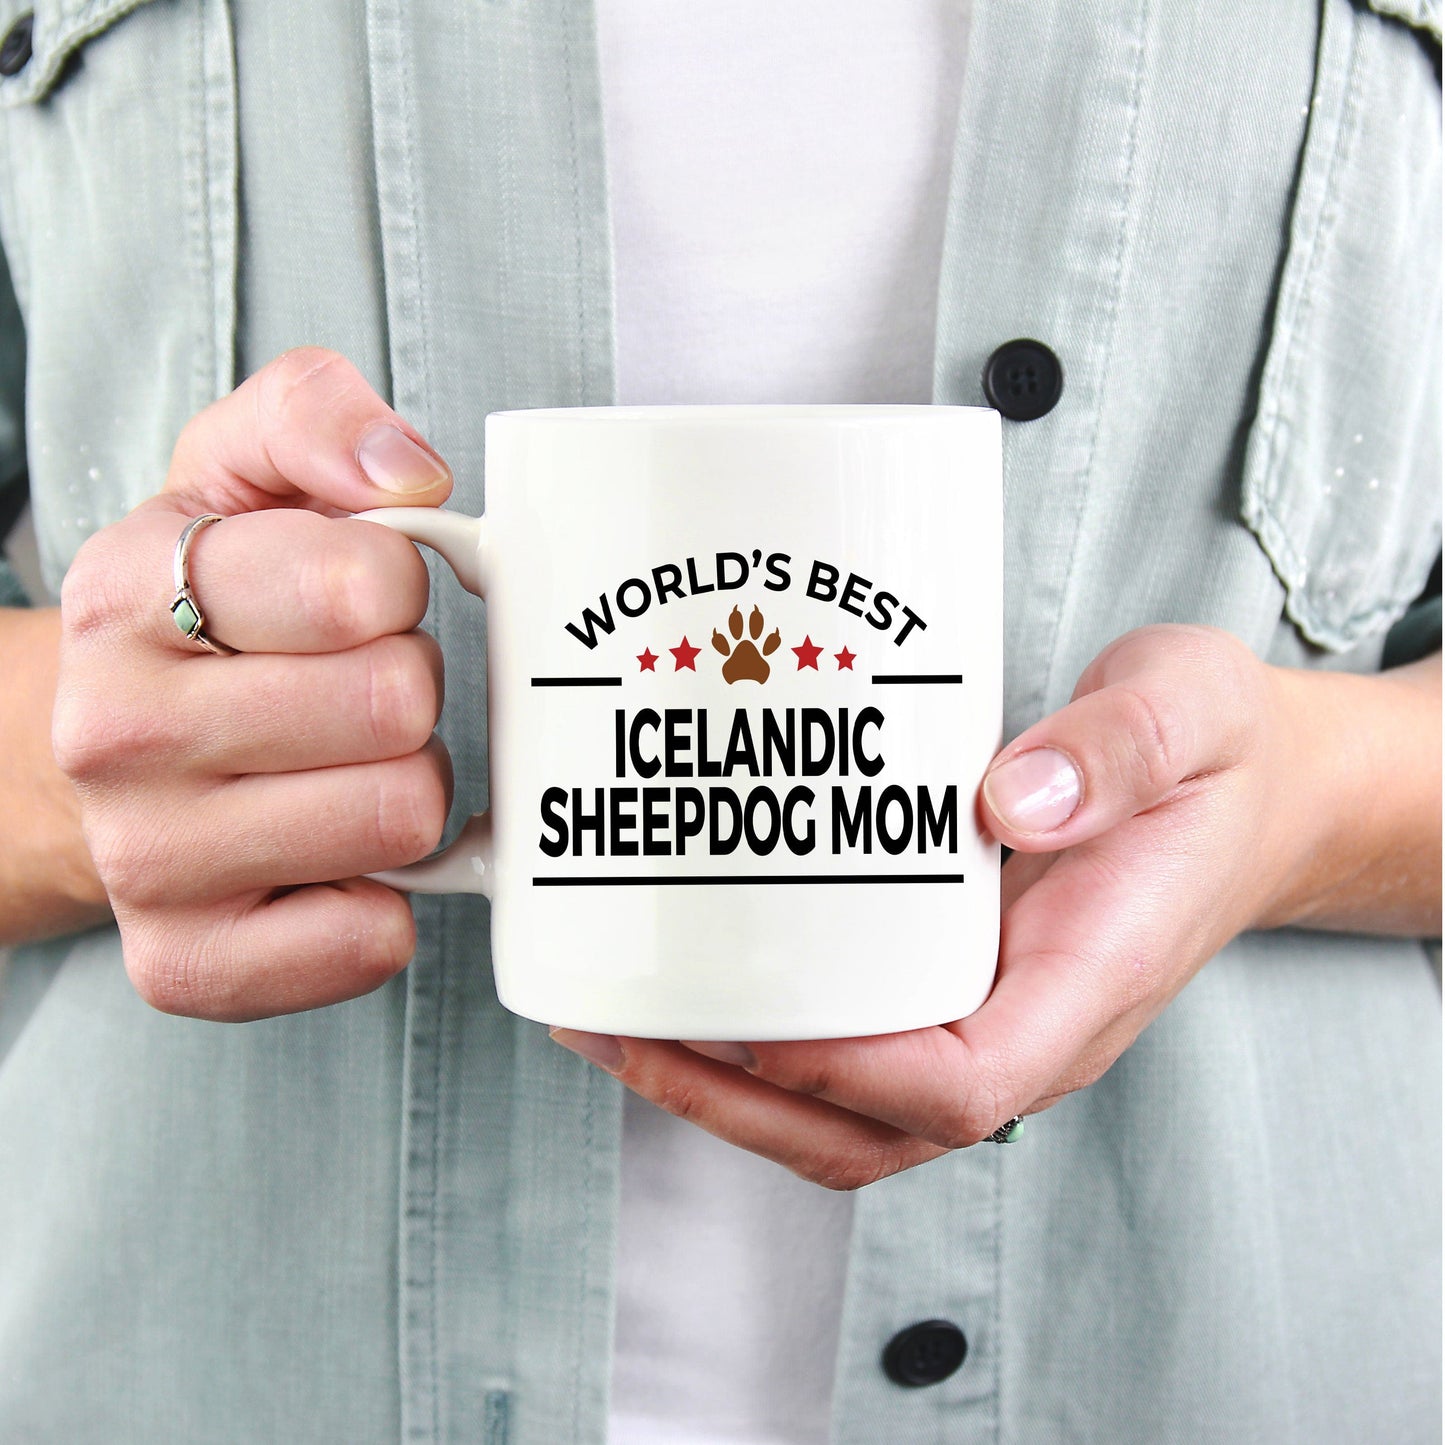 Icelandic Sheepdog Lover Gift World's Best Mom Birthday Mother's Day White Ceramic Coffee Mug